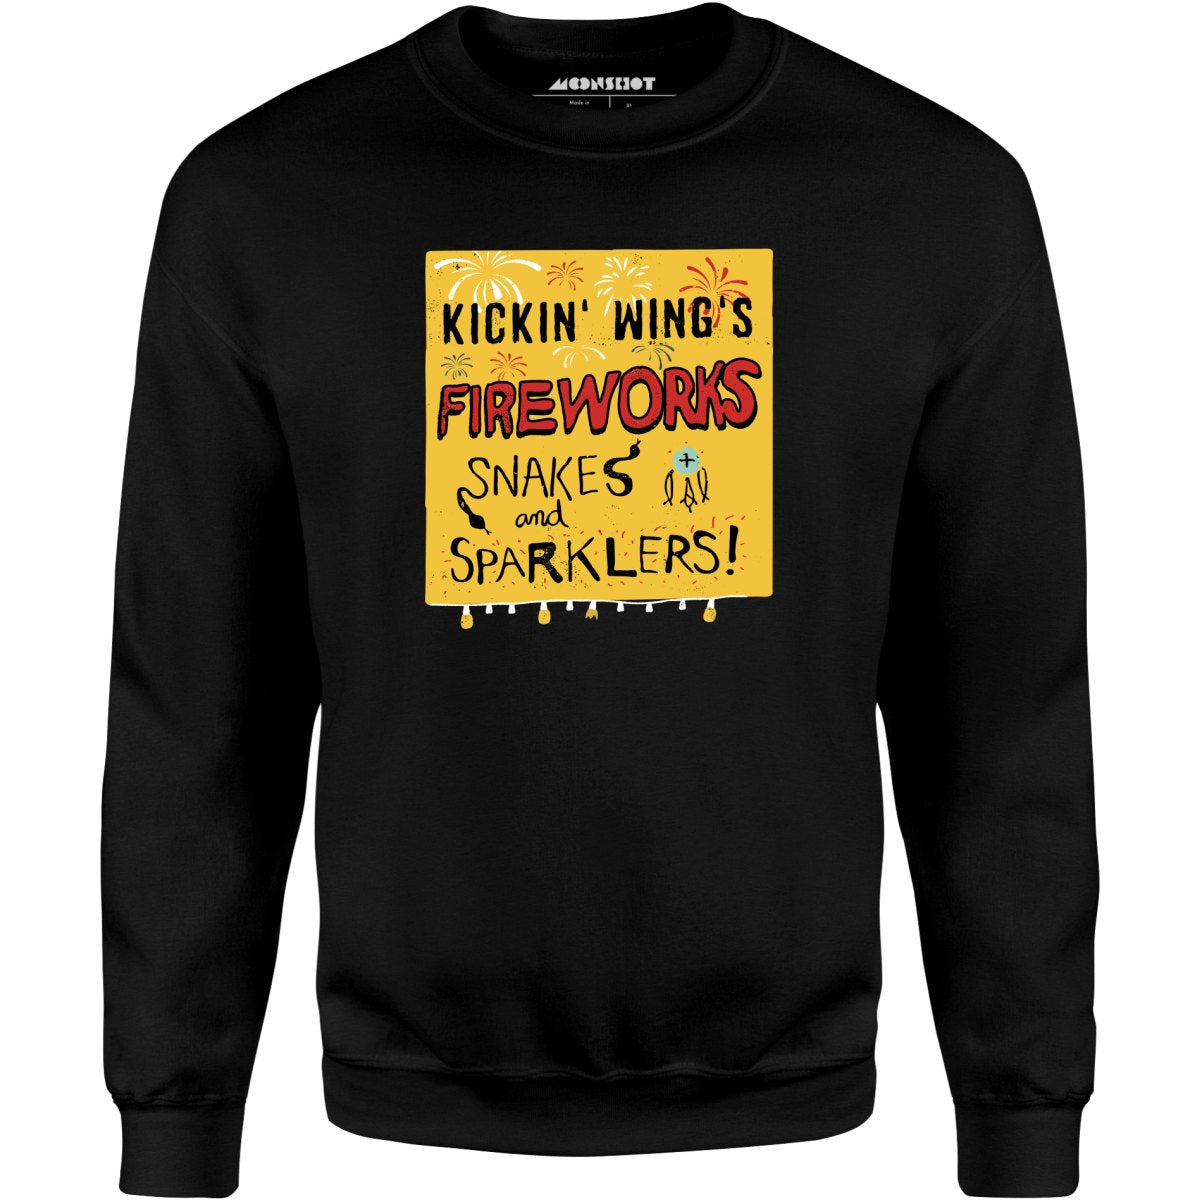 Kickin' Wing's Fireworks Snakes & Sparklers - Unisex Sweatshirt